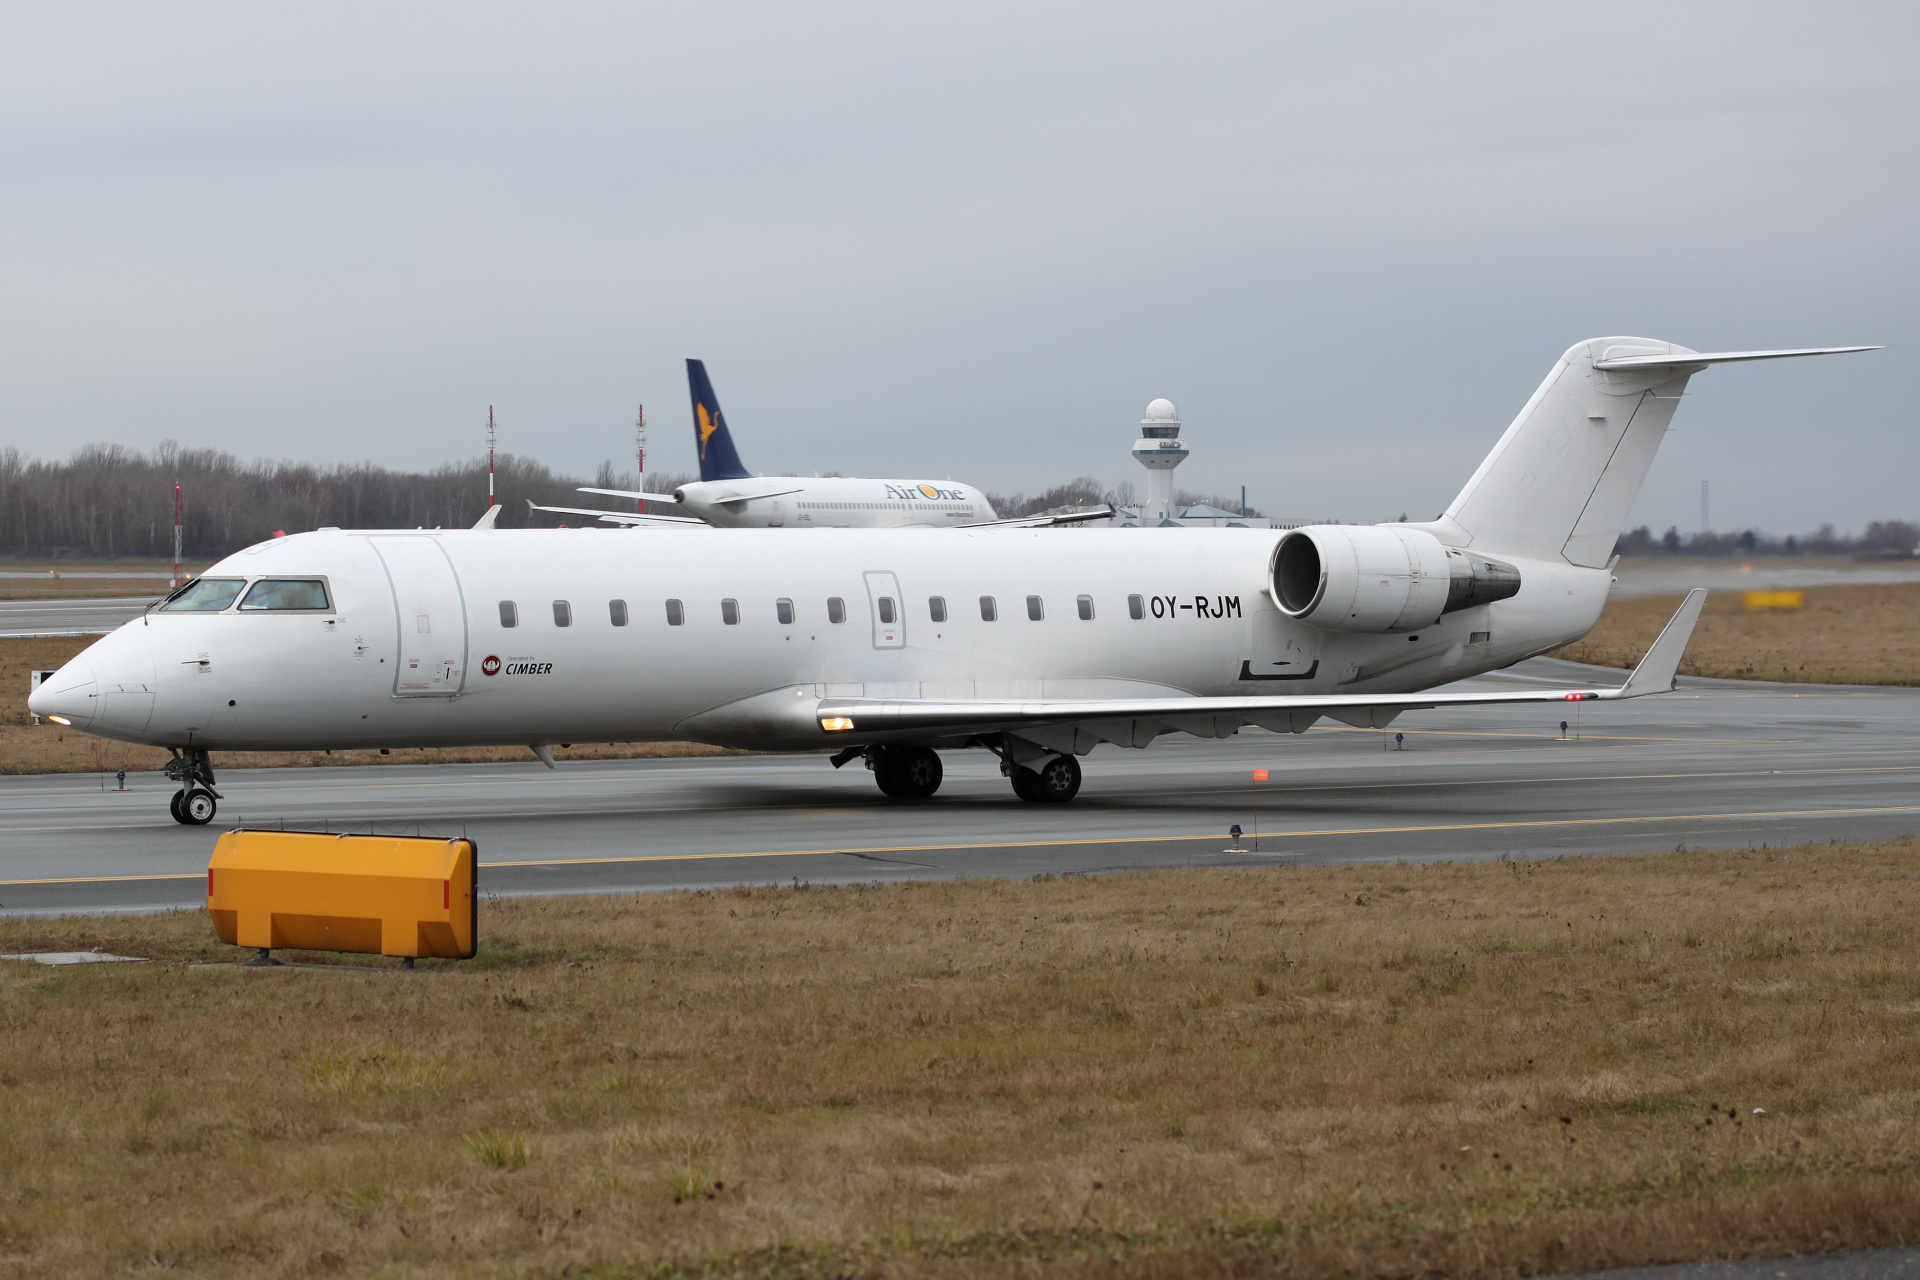 OY-RJM (Aircraft » EPWA Spotting » Bombardier CL-600 Regional Jet » CRJ-200 » Cimber Air)